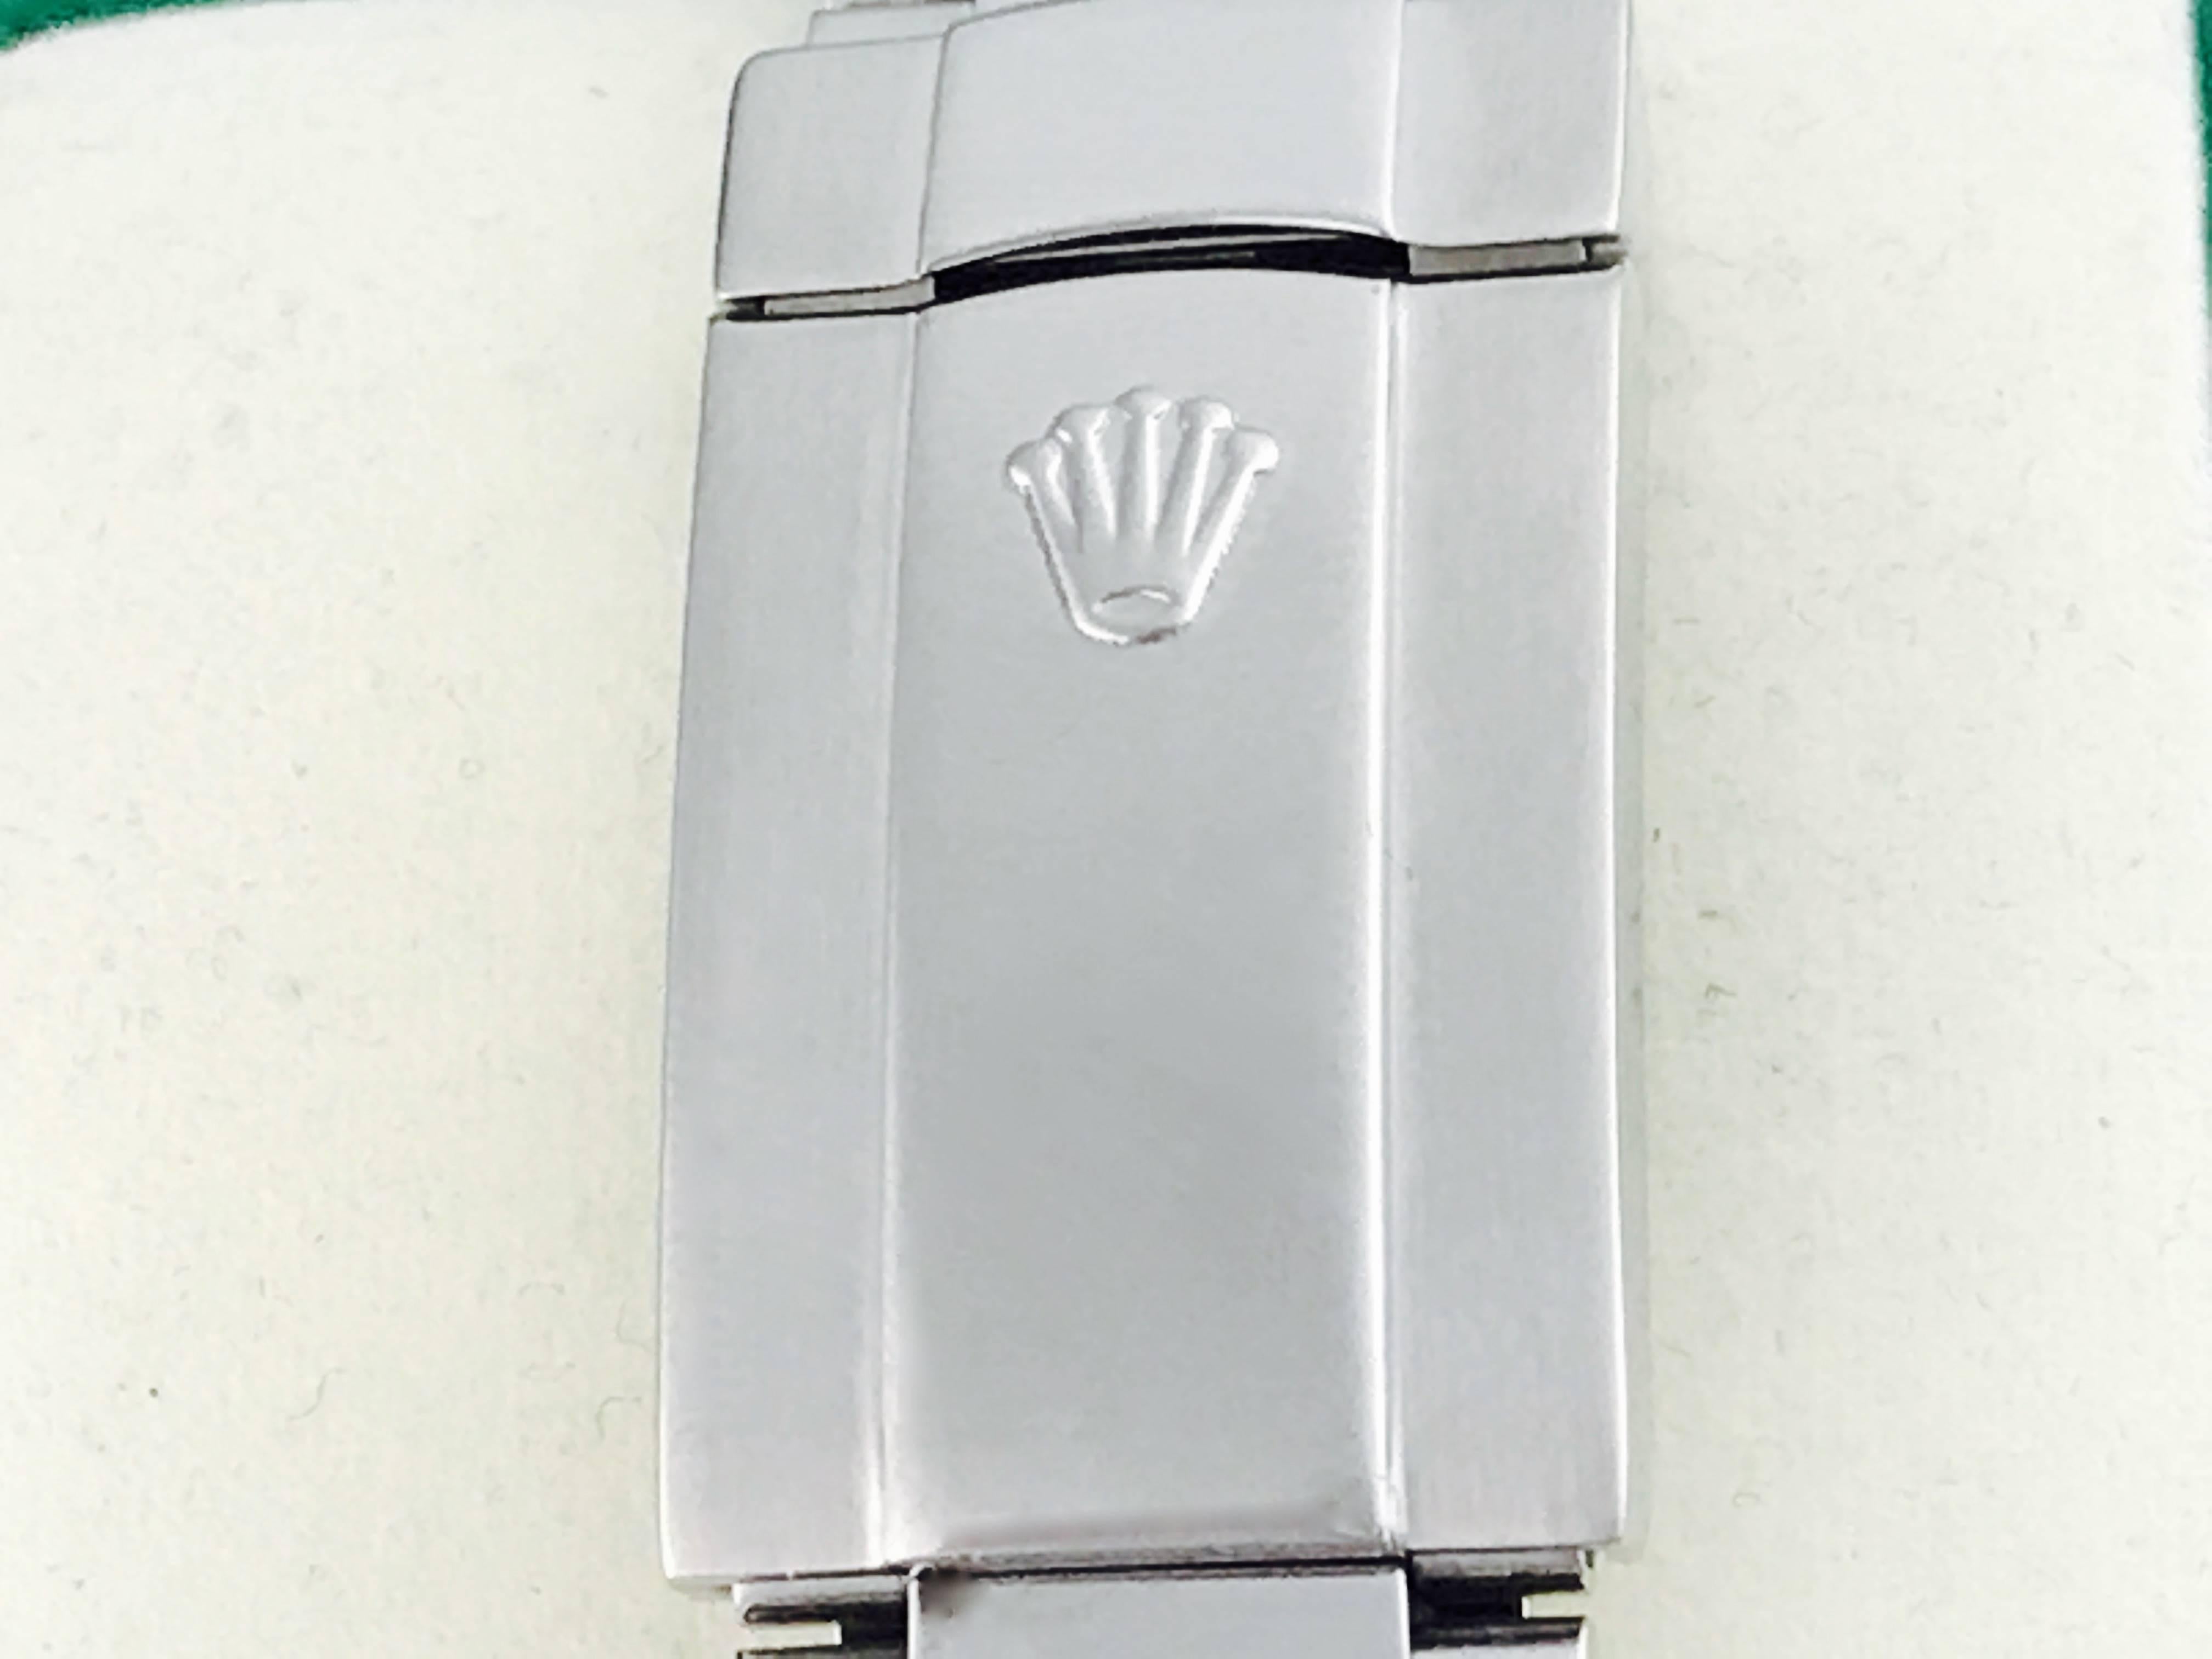 Rolex Stainless Steel Datejust Automatic Wristwatch Ref 116234 1